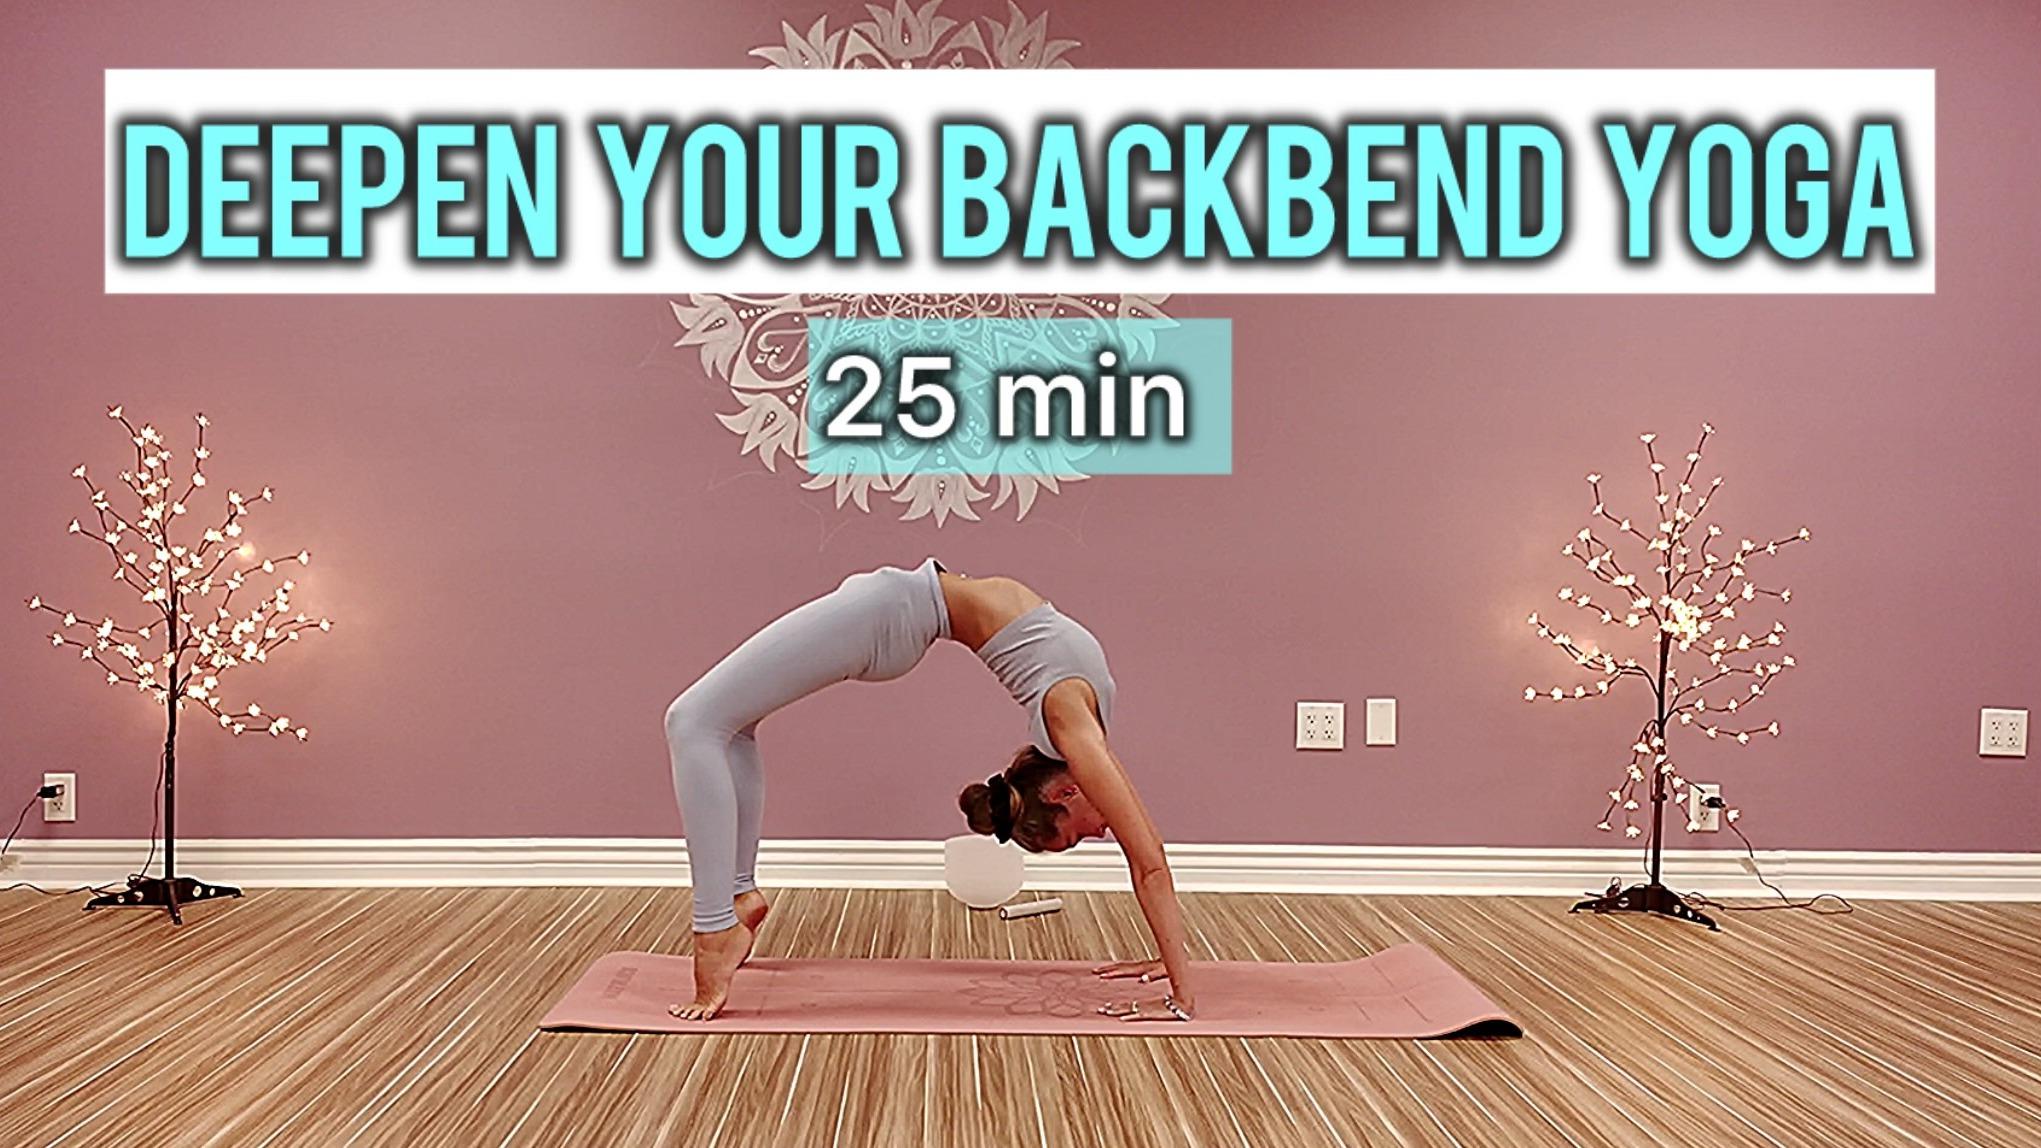 Deepen your backbend yoga